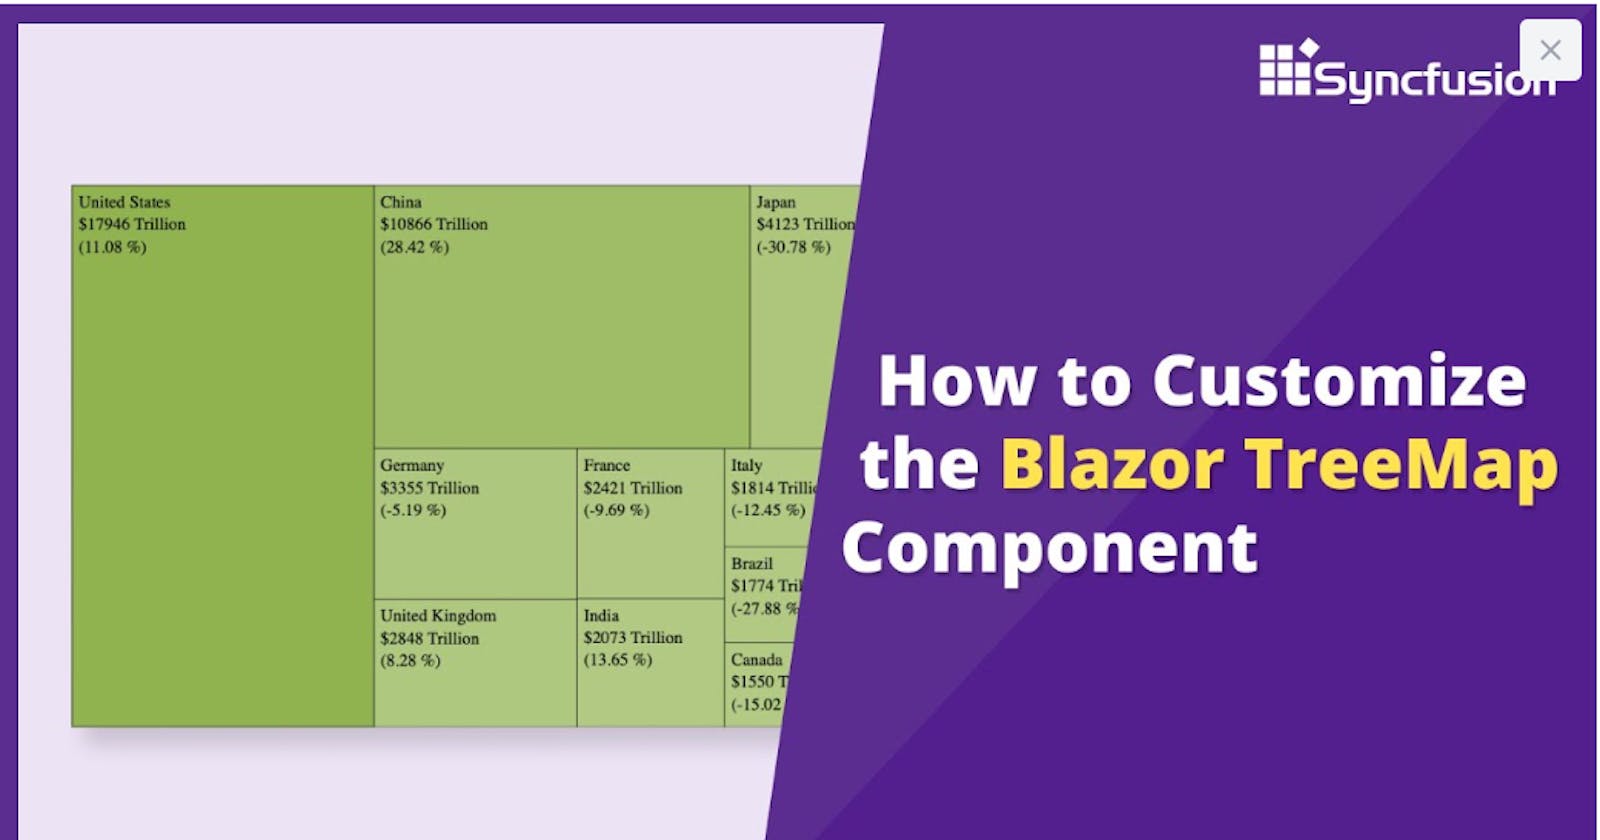 How to Customize the Blazor TreeMap Component